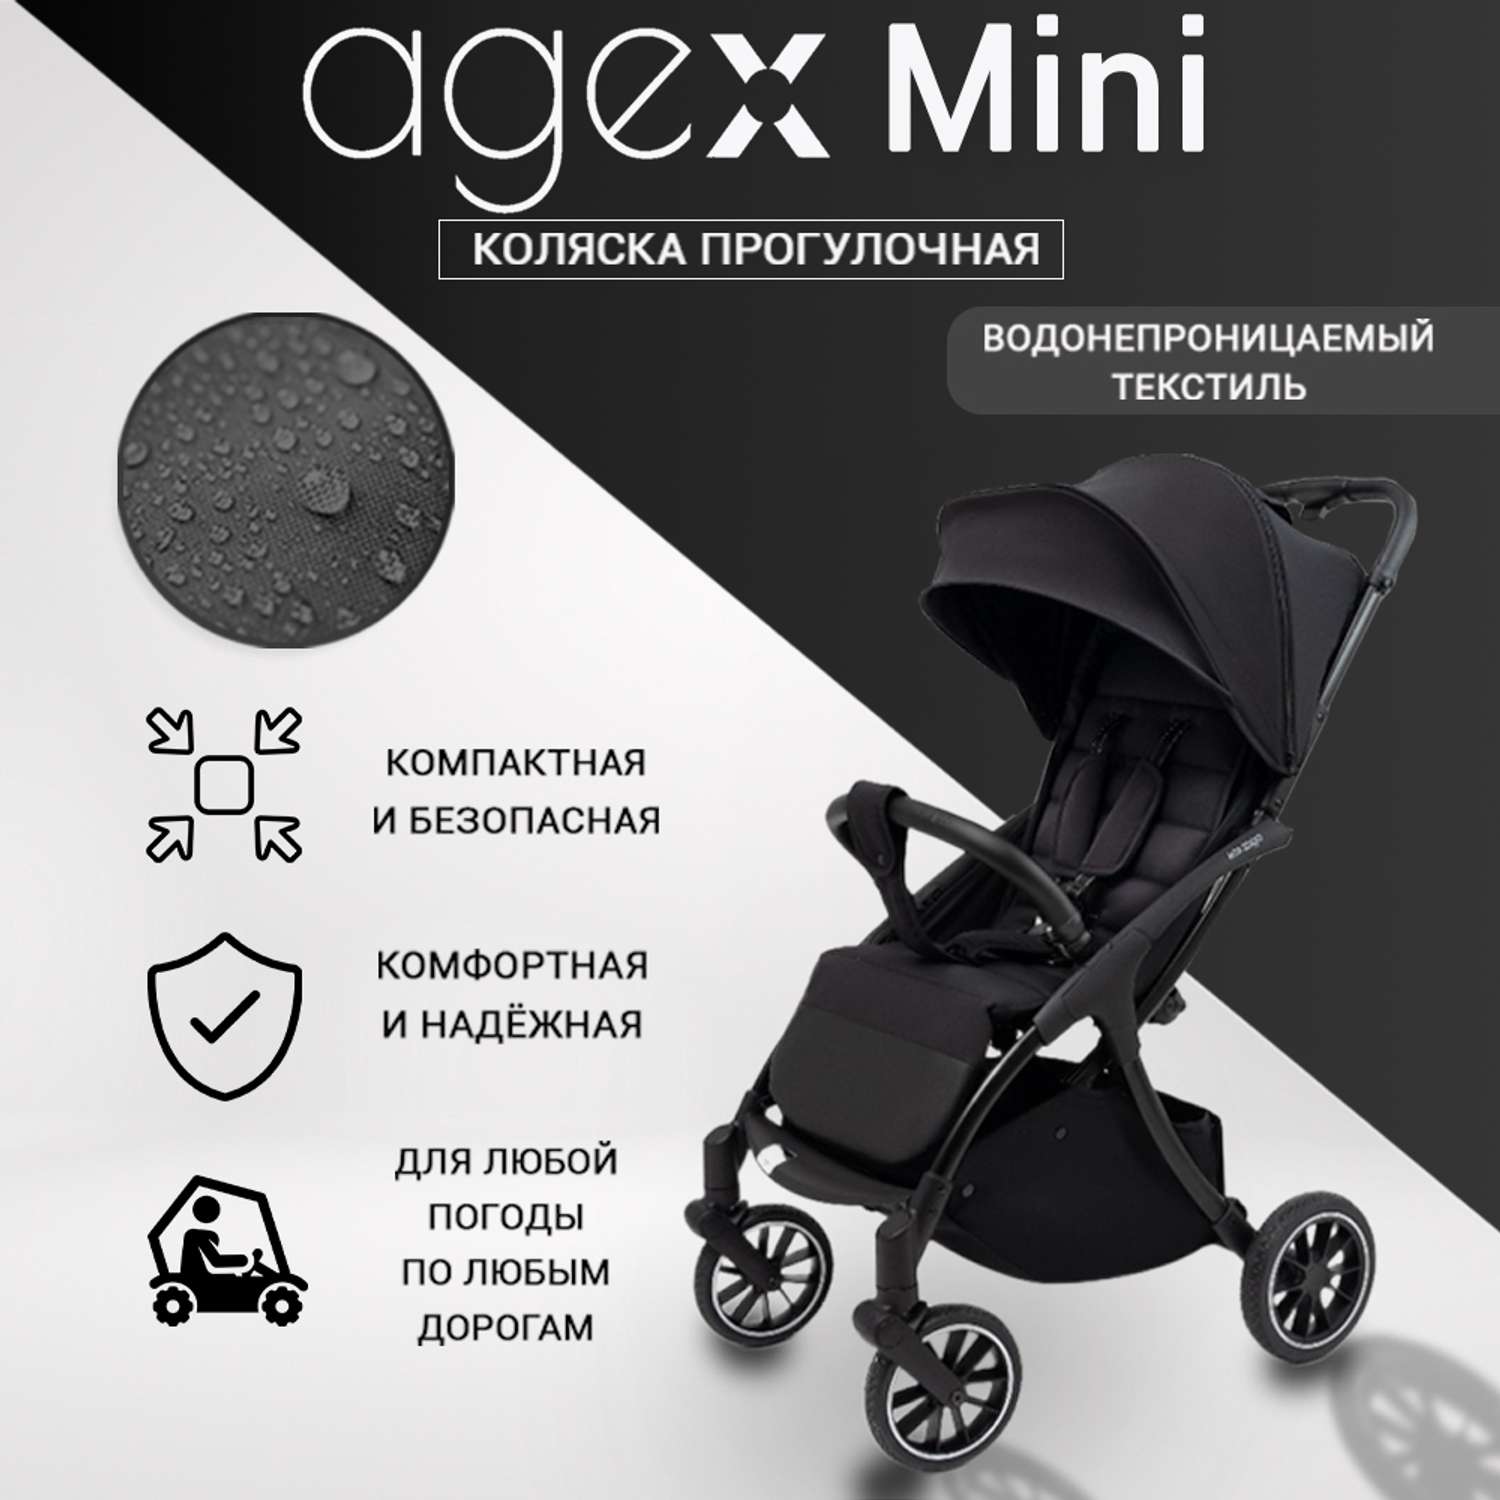 Коляска прогулочная agex Mini LX Black - фото 1